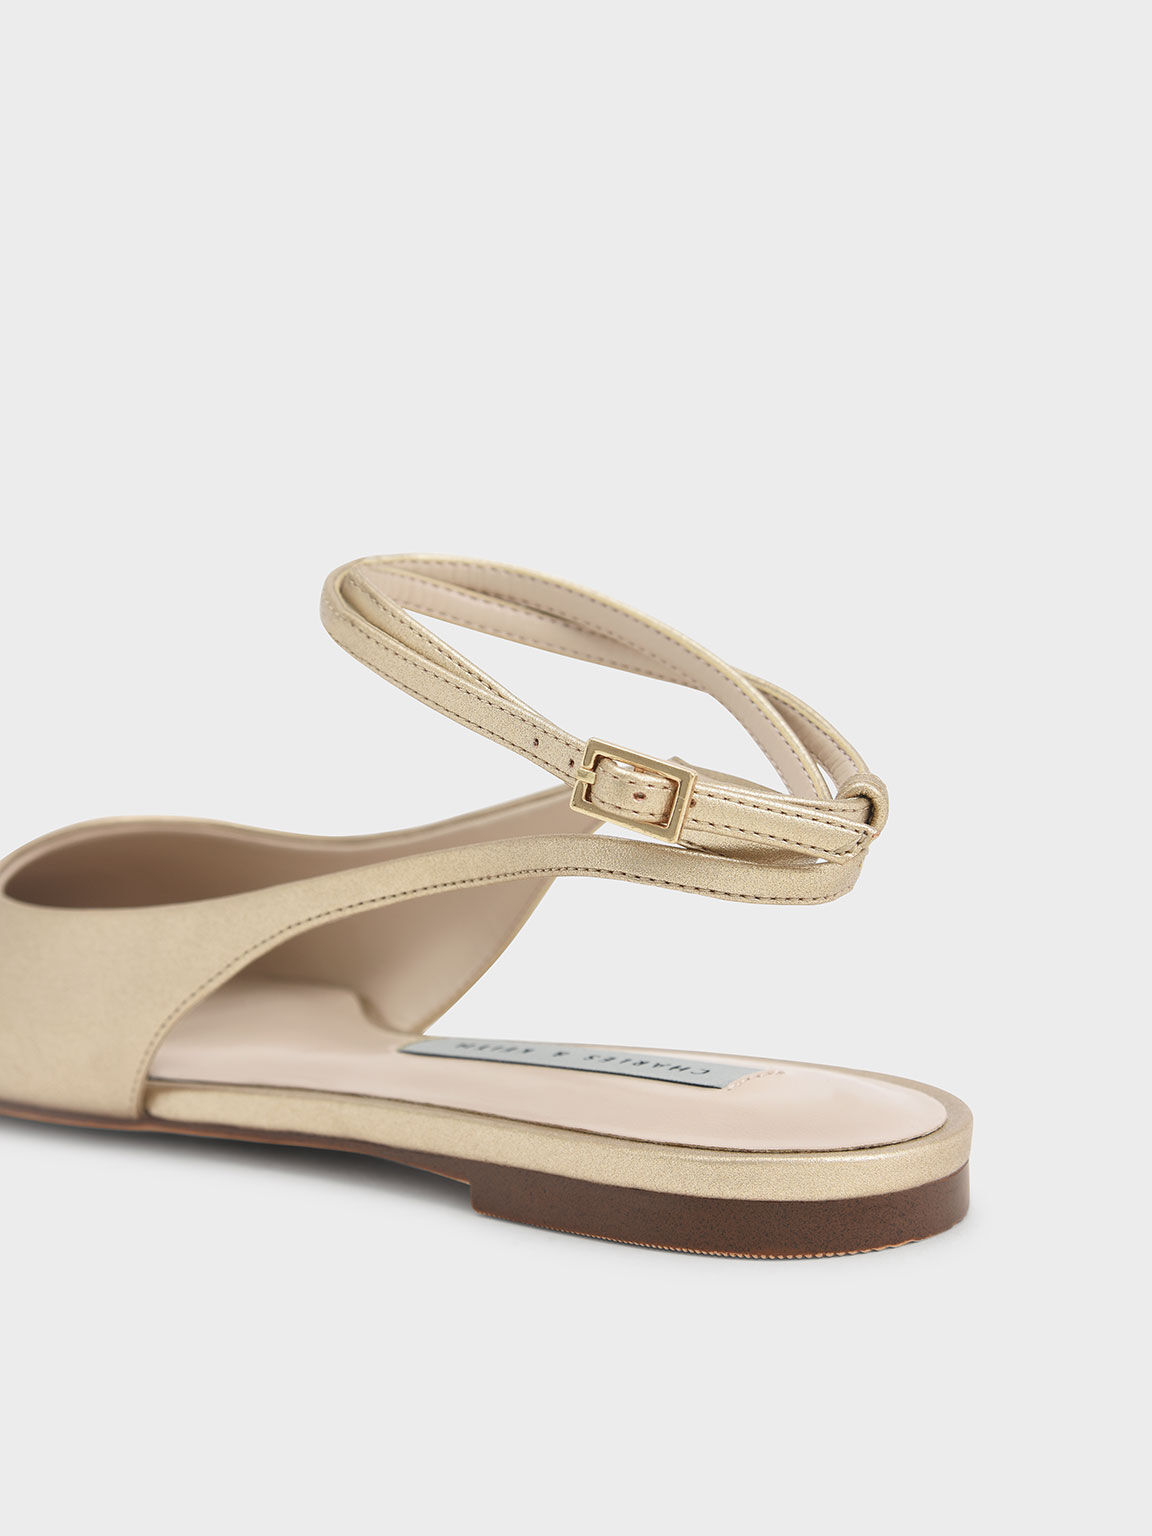 Sepatu Pumps Ballerina Metallic Ankle-Strap, Gold, hi-res